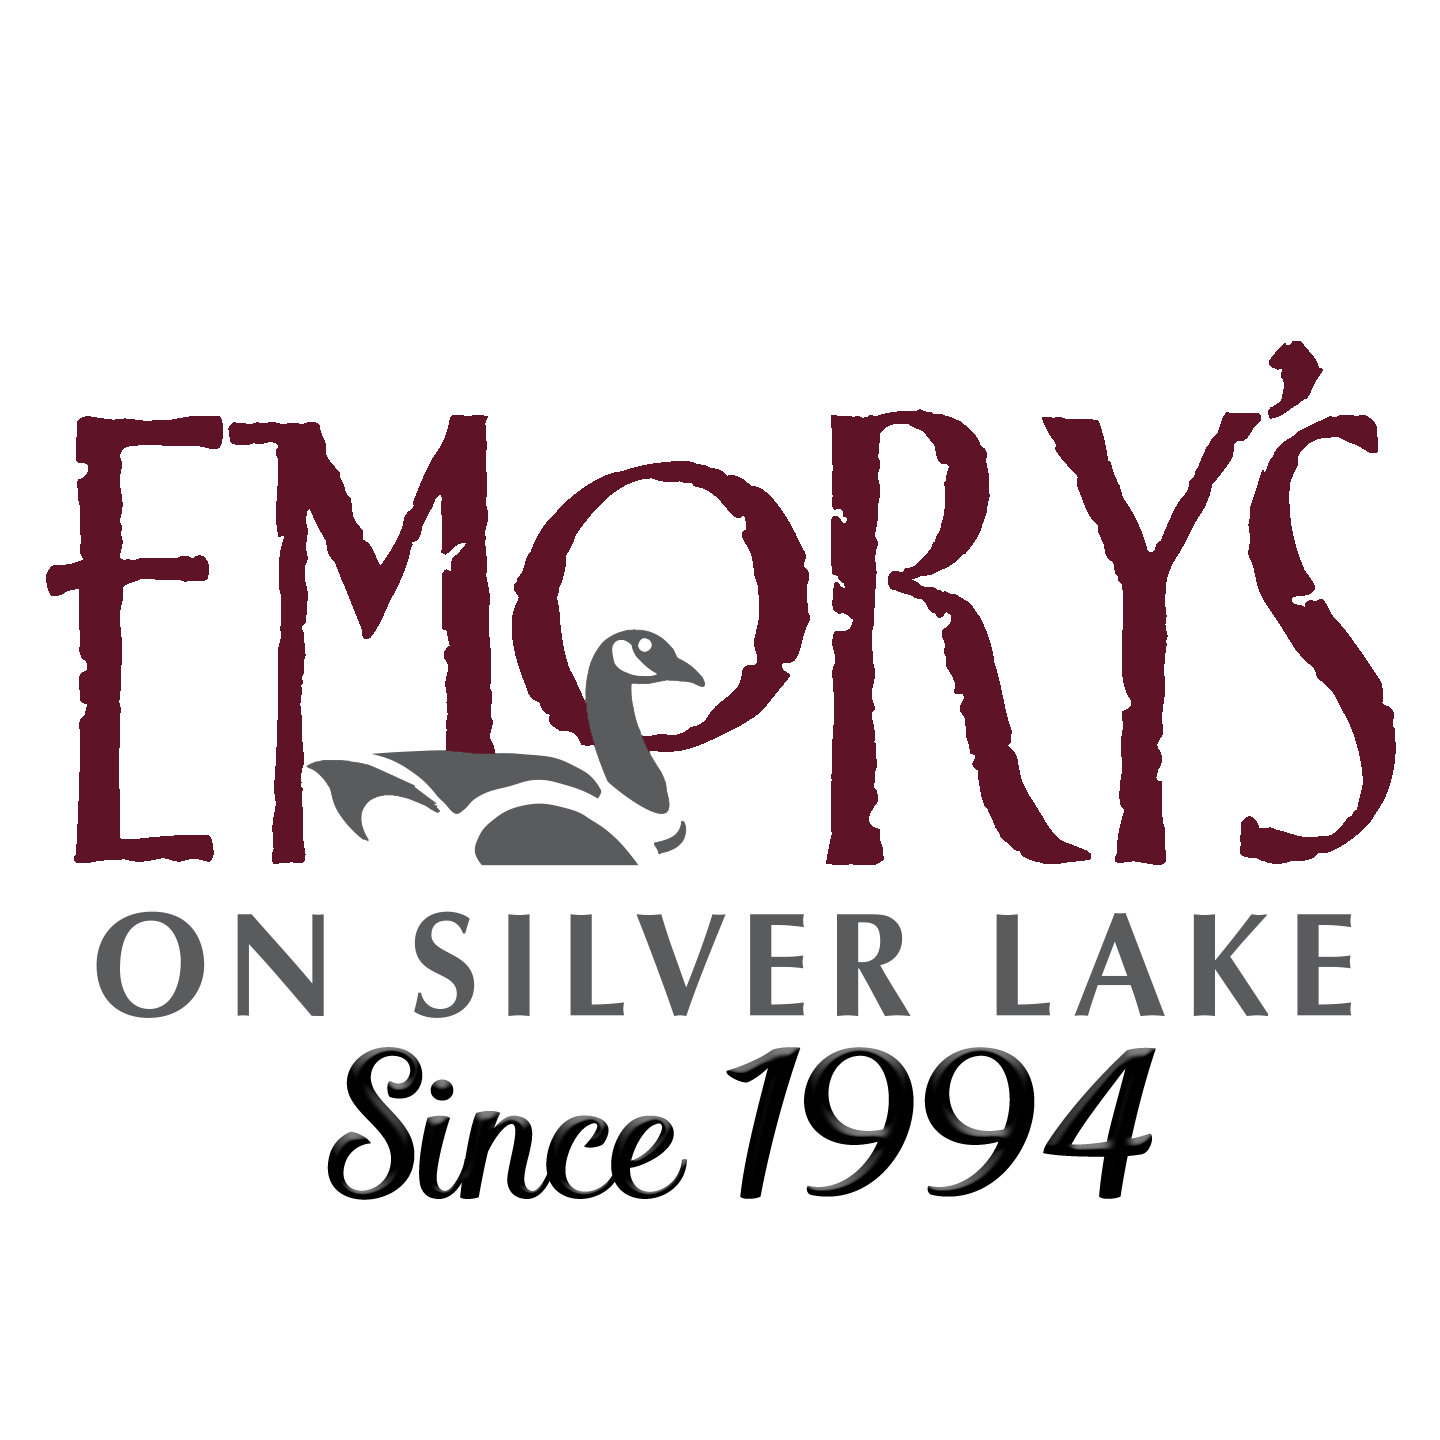 Emory’s on Silver Lake